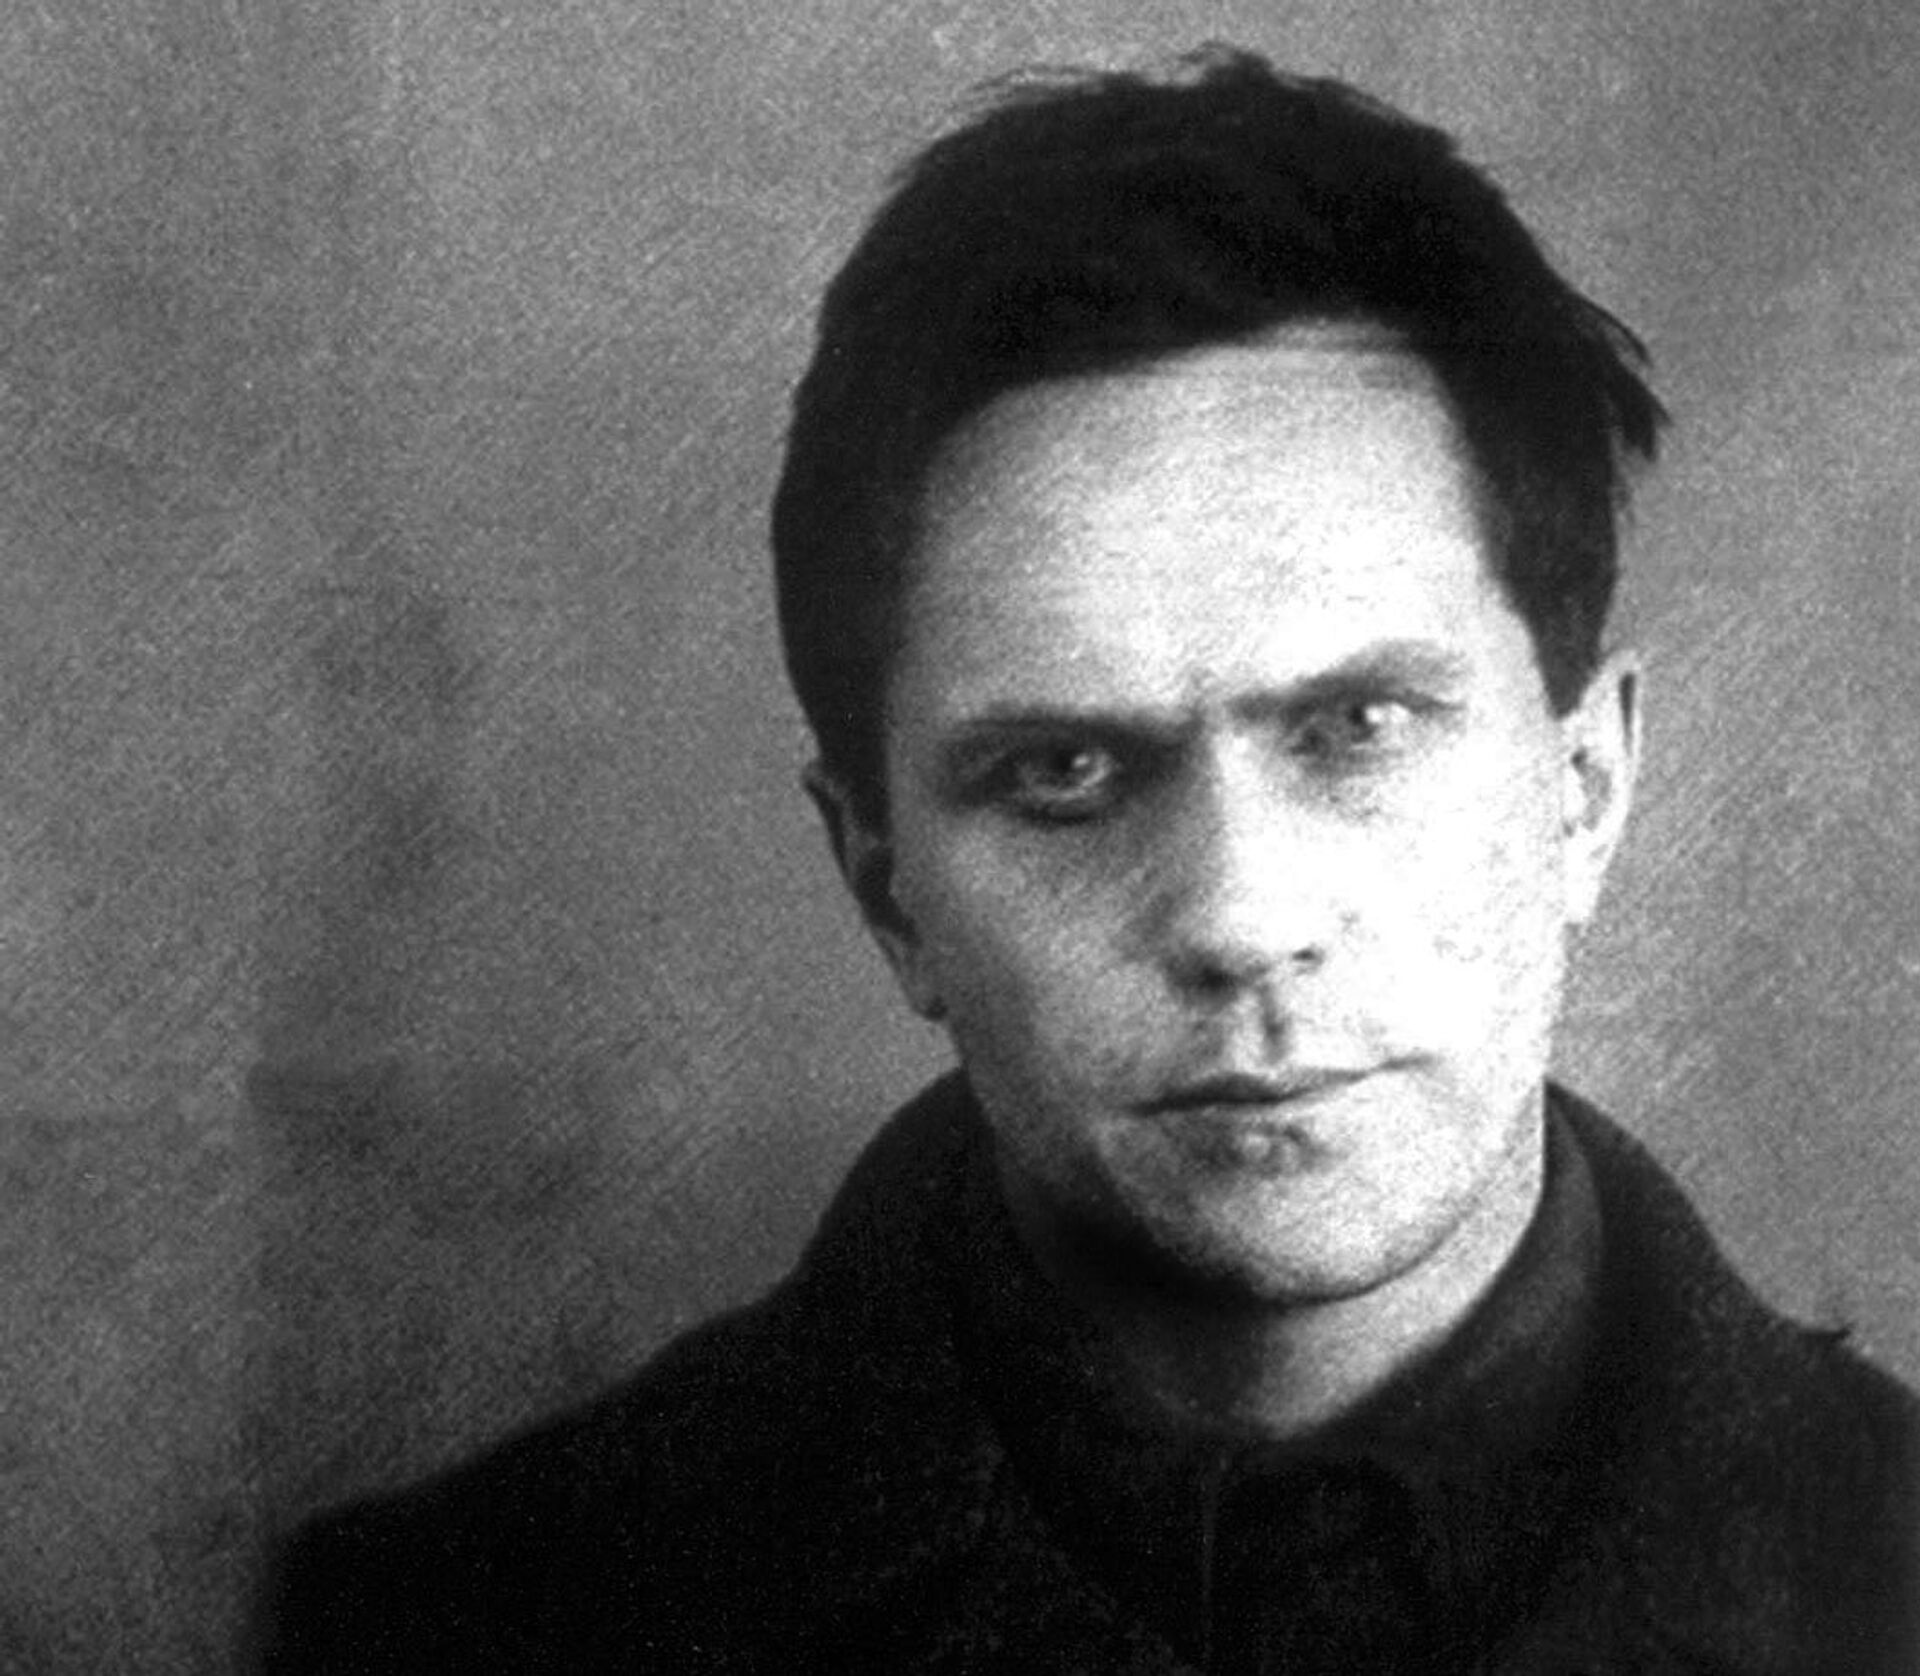 Фотография Варлама Шаламова после ареста. 1937 год - РИА Новости, 1920, 23.09.2020